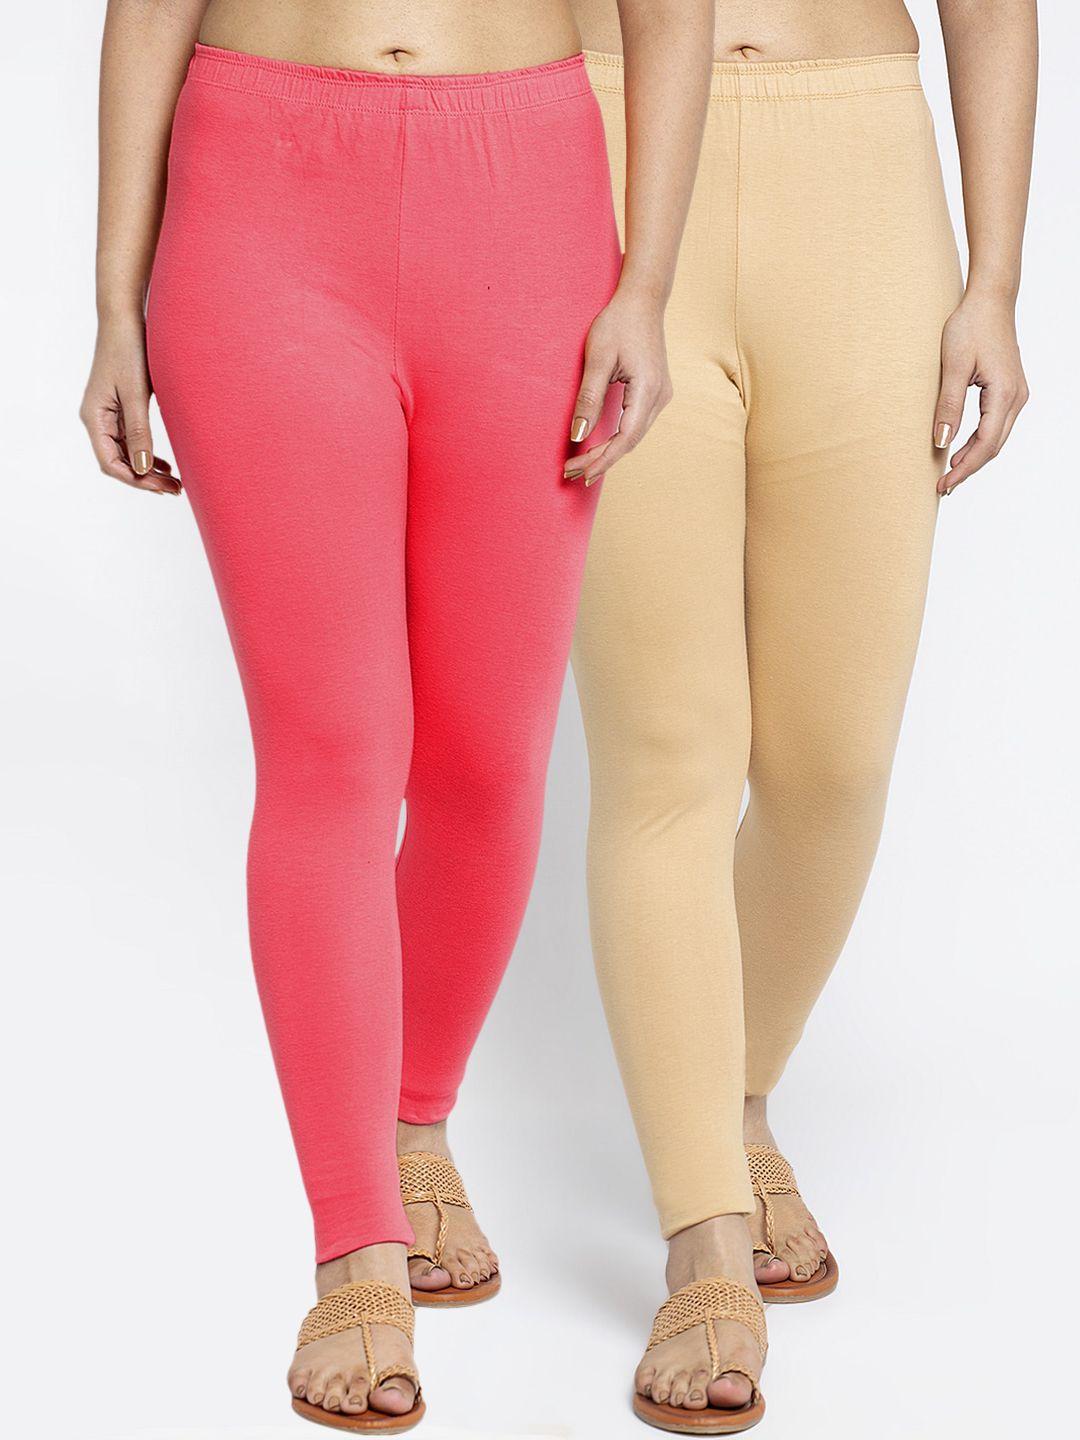 gracit-women-pack-of-2-beige-&-peach-solid-ankle-length-leggings